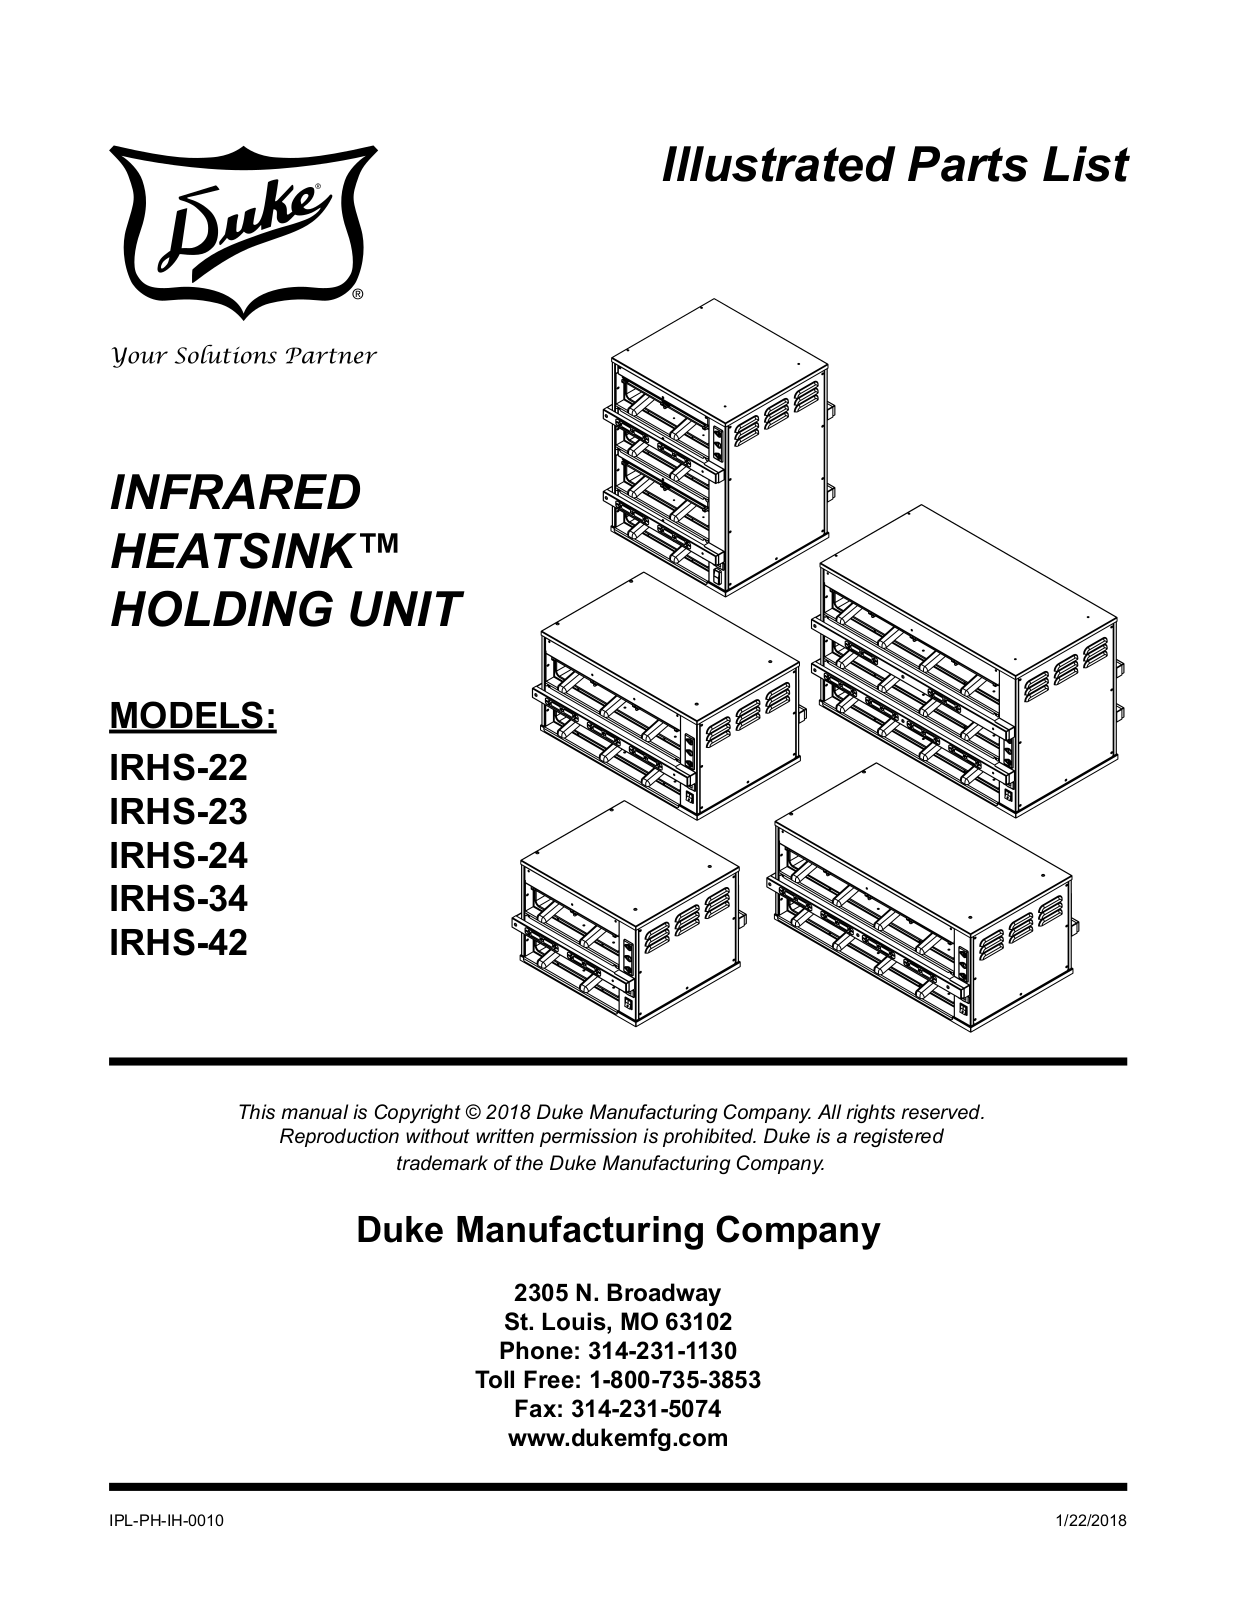 Duke IRHS-22 Parts List